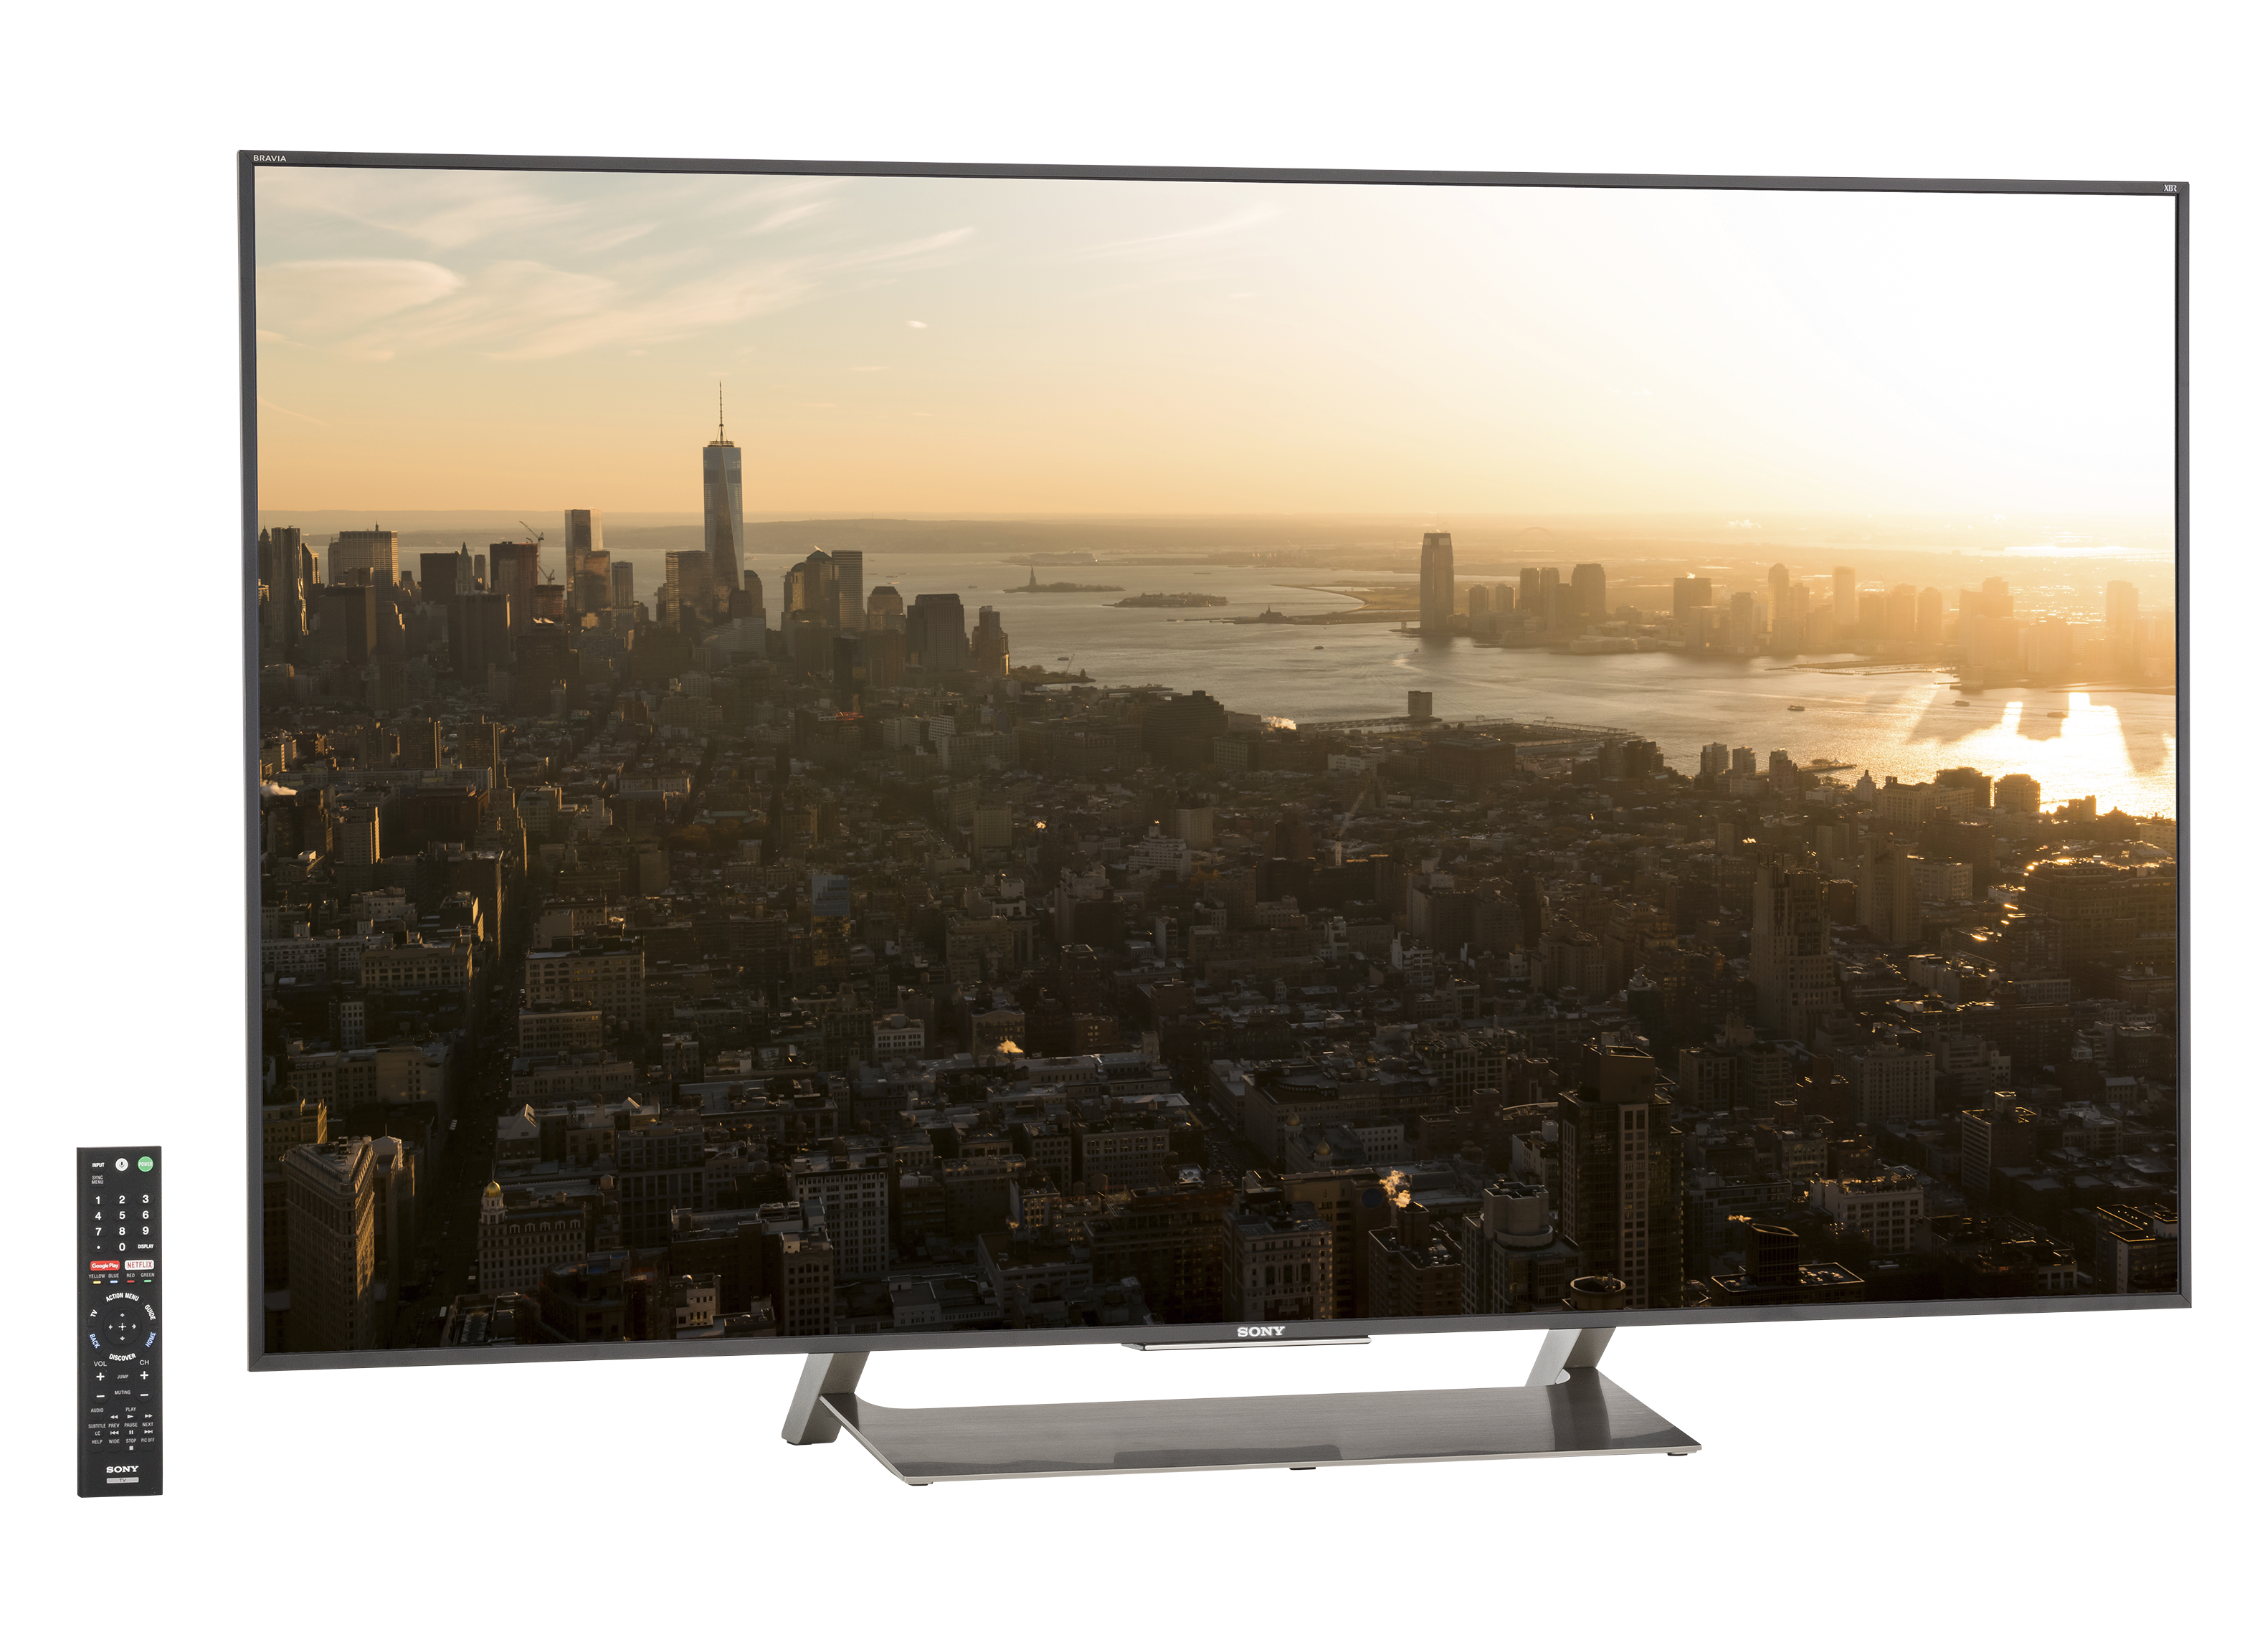 Sony 55 Class 4K(2160P) Smart LED TV (XBR55X900E)